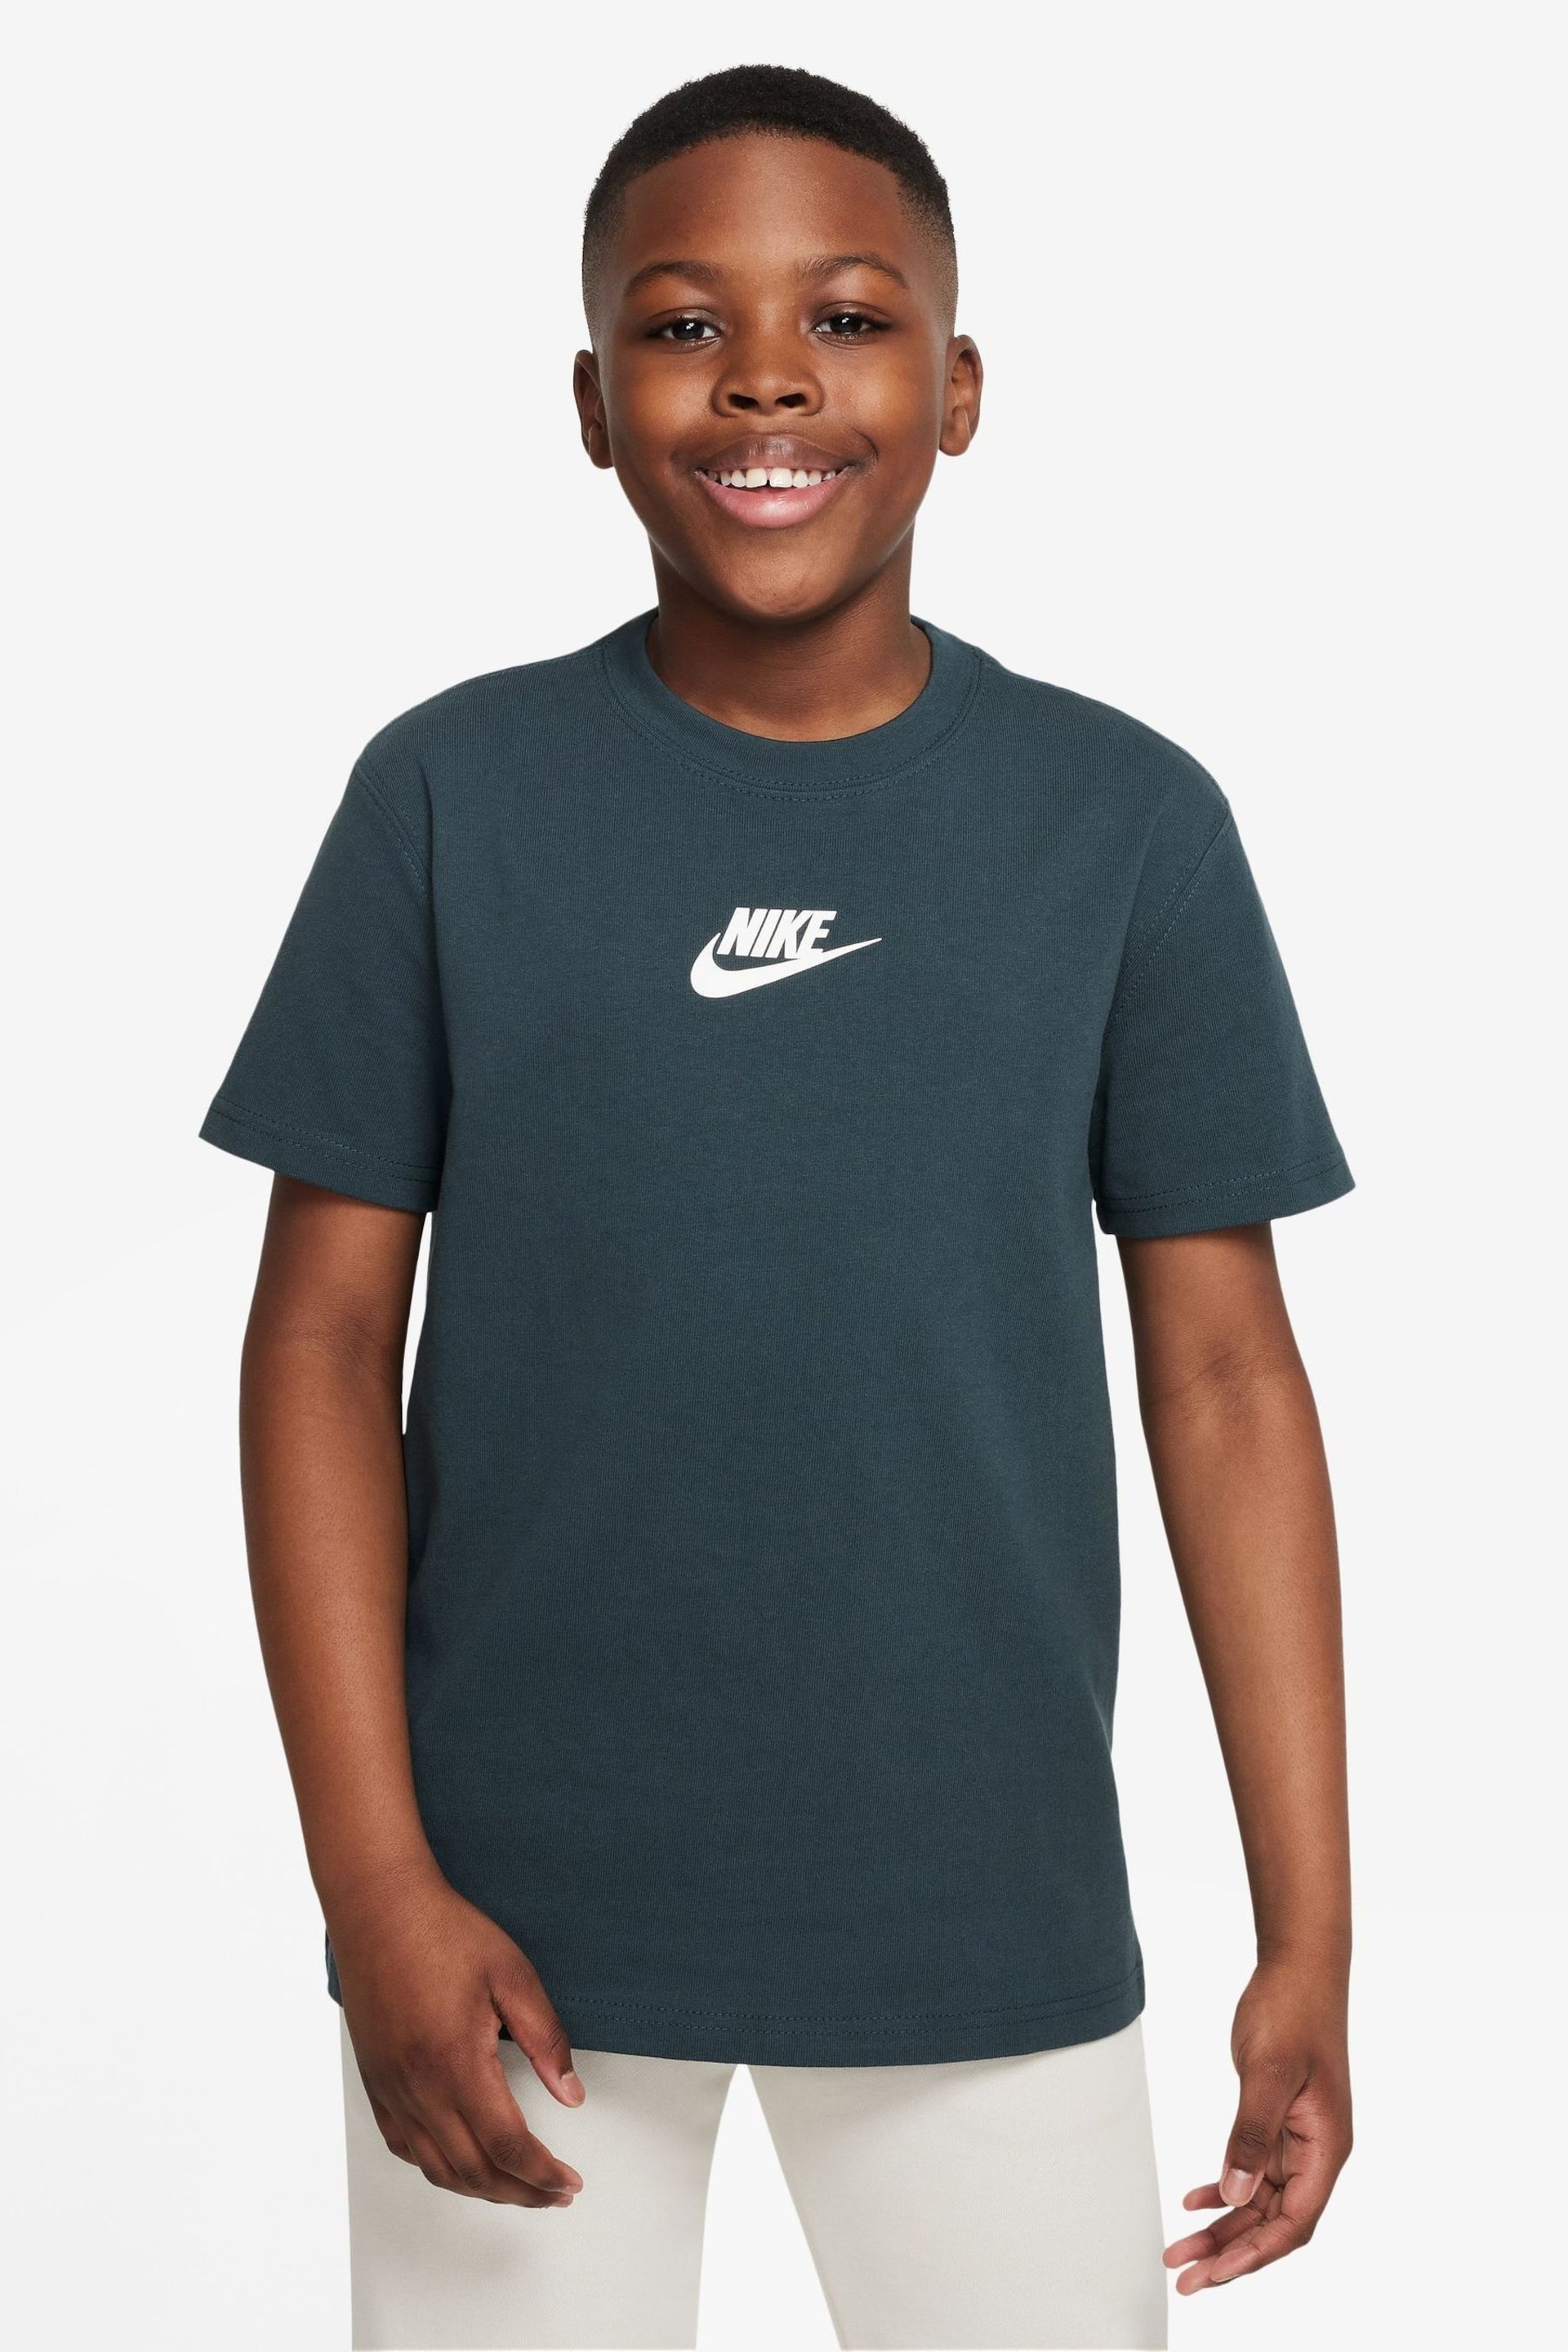 Nike Teal Blue Premium T-Shirt - Image 1 of 3